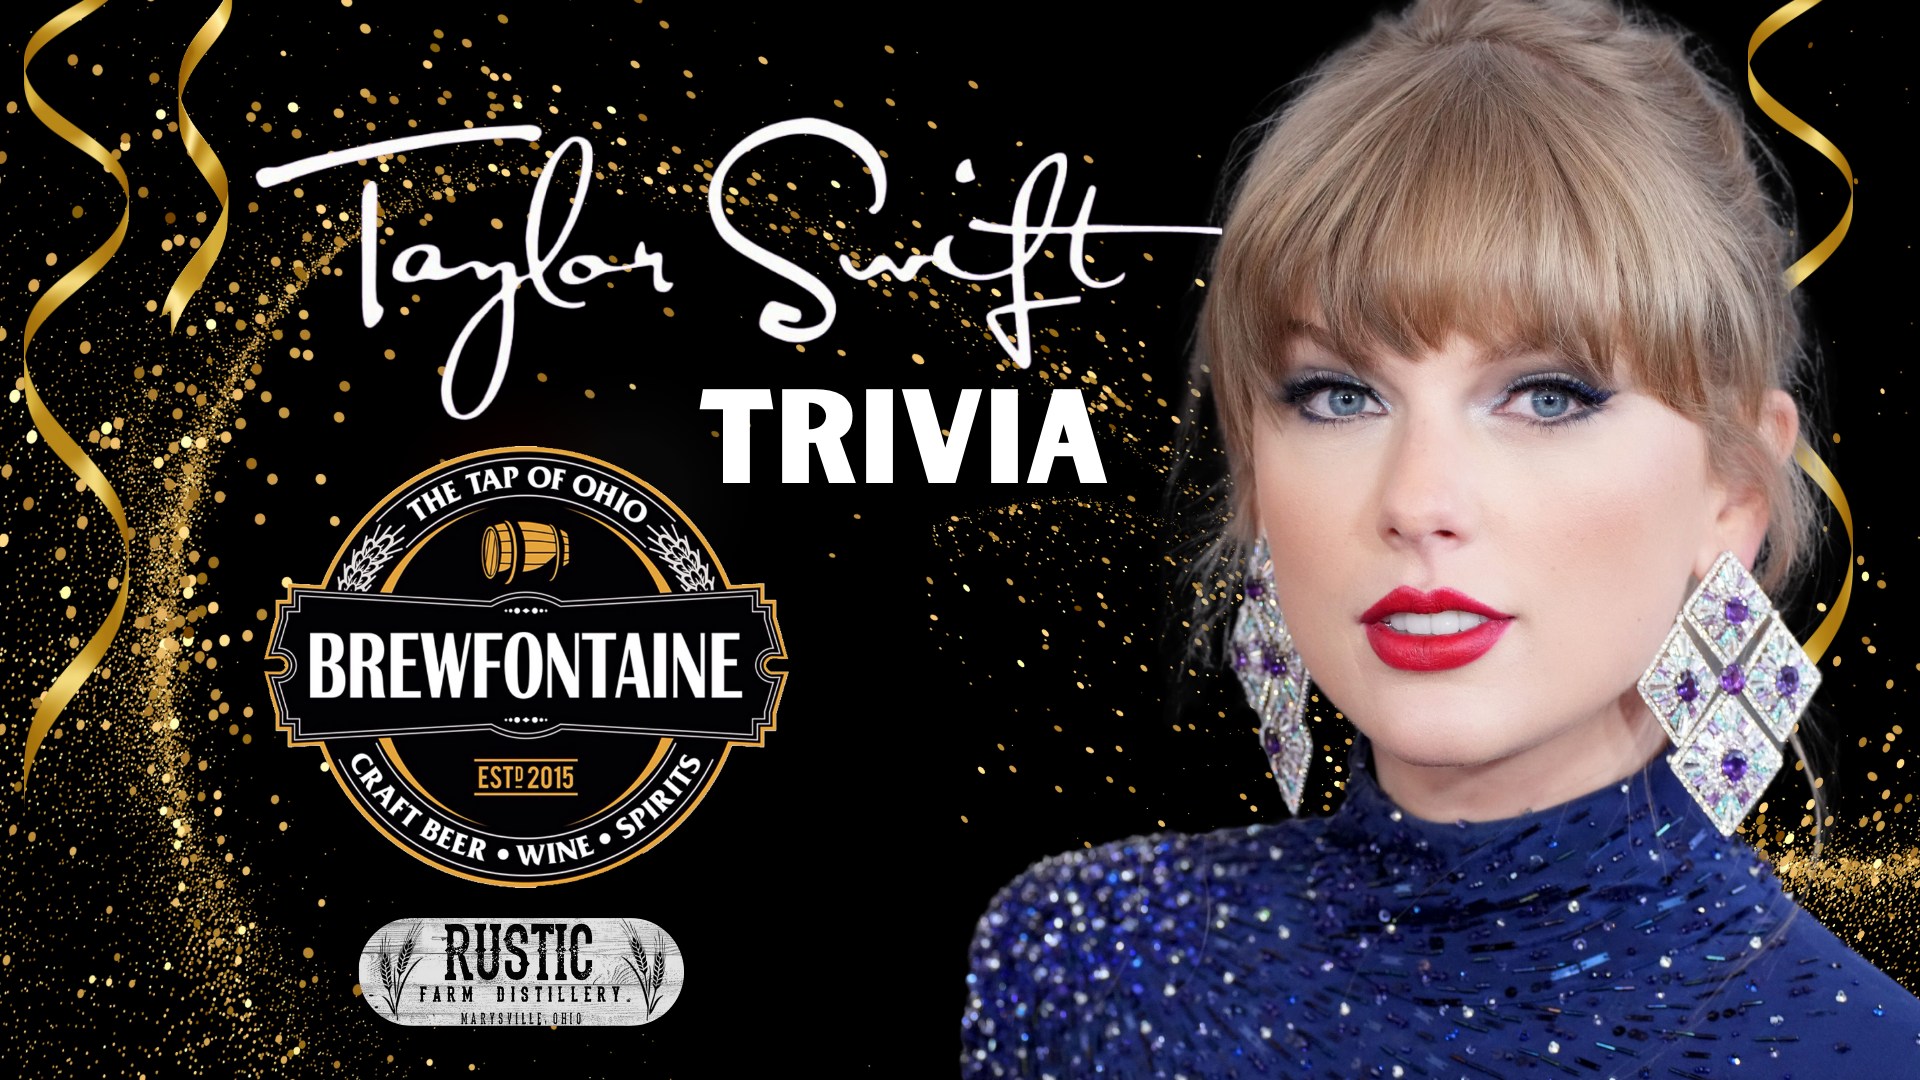 Taylor Swift Trivia with Rustic Farm Distillery